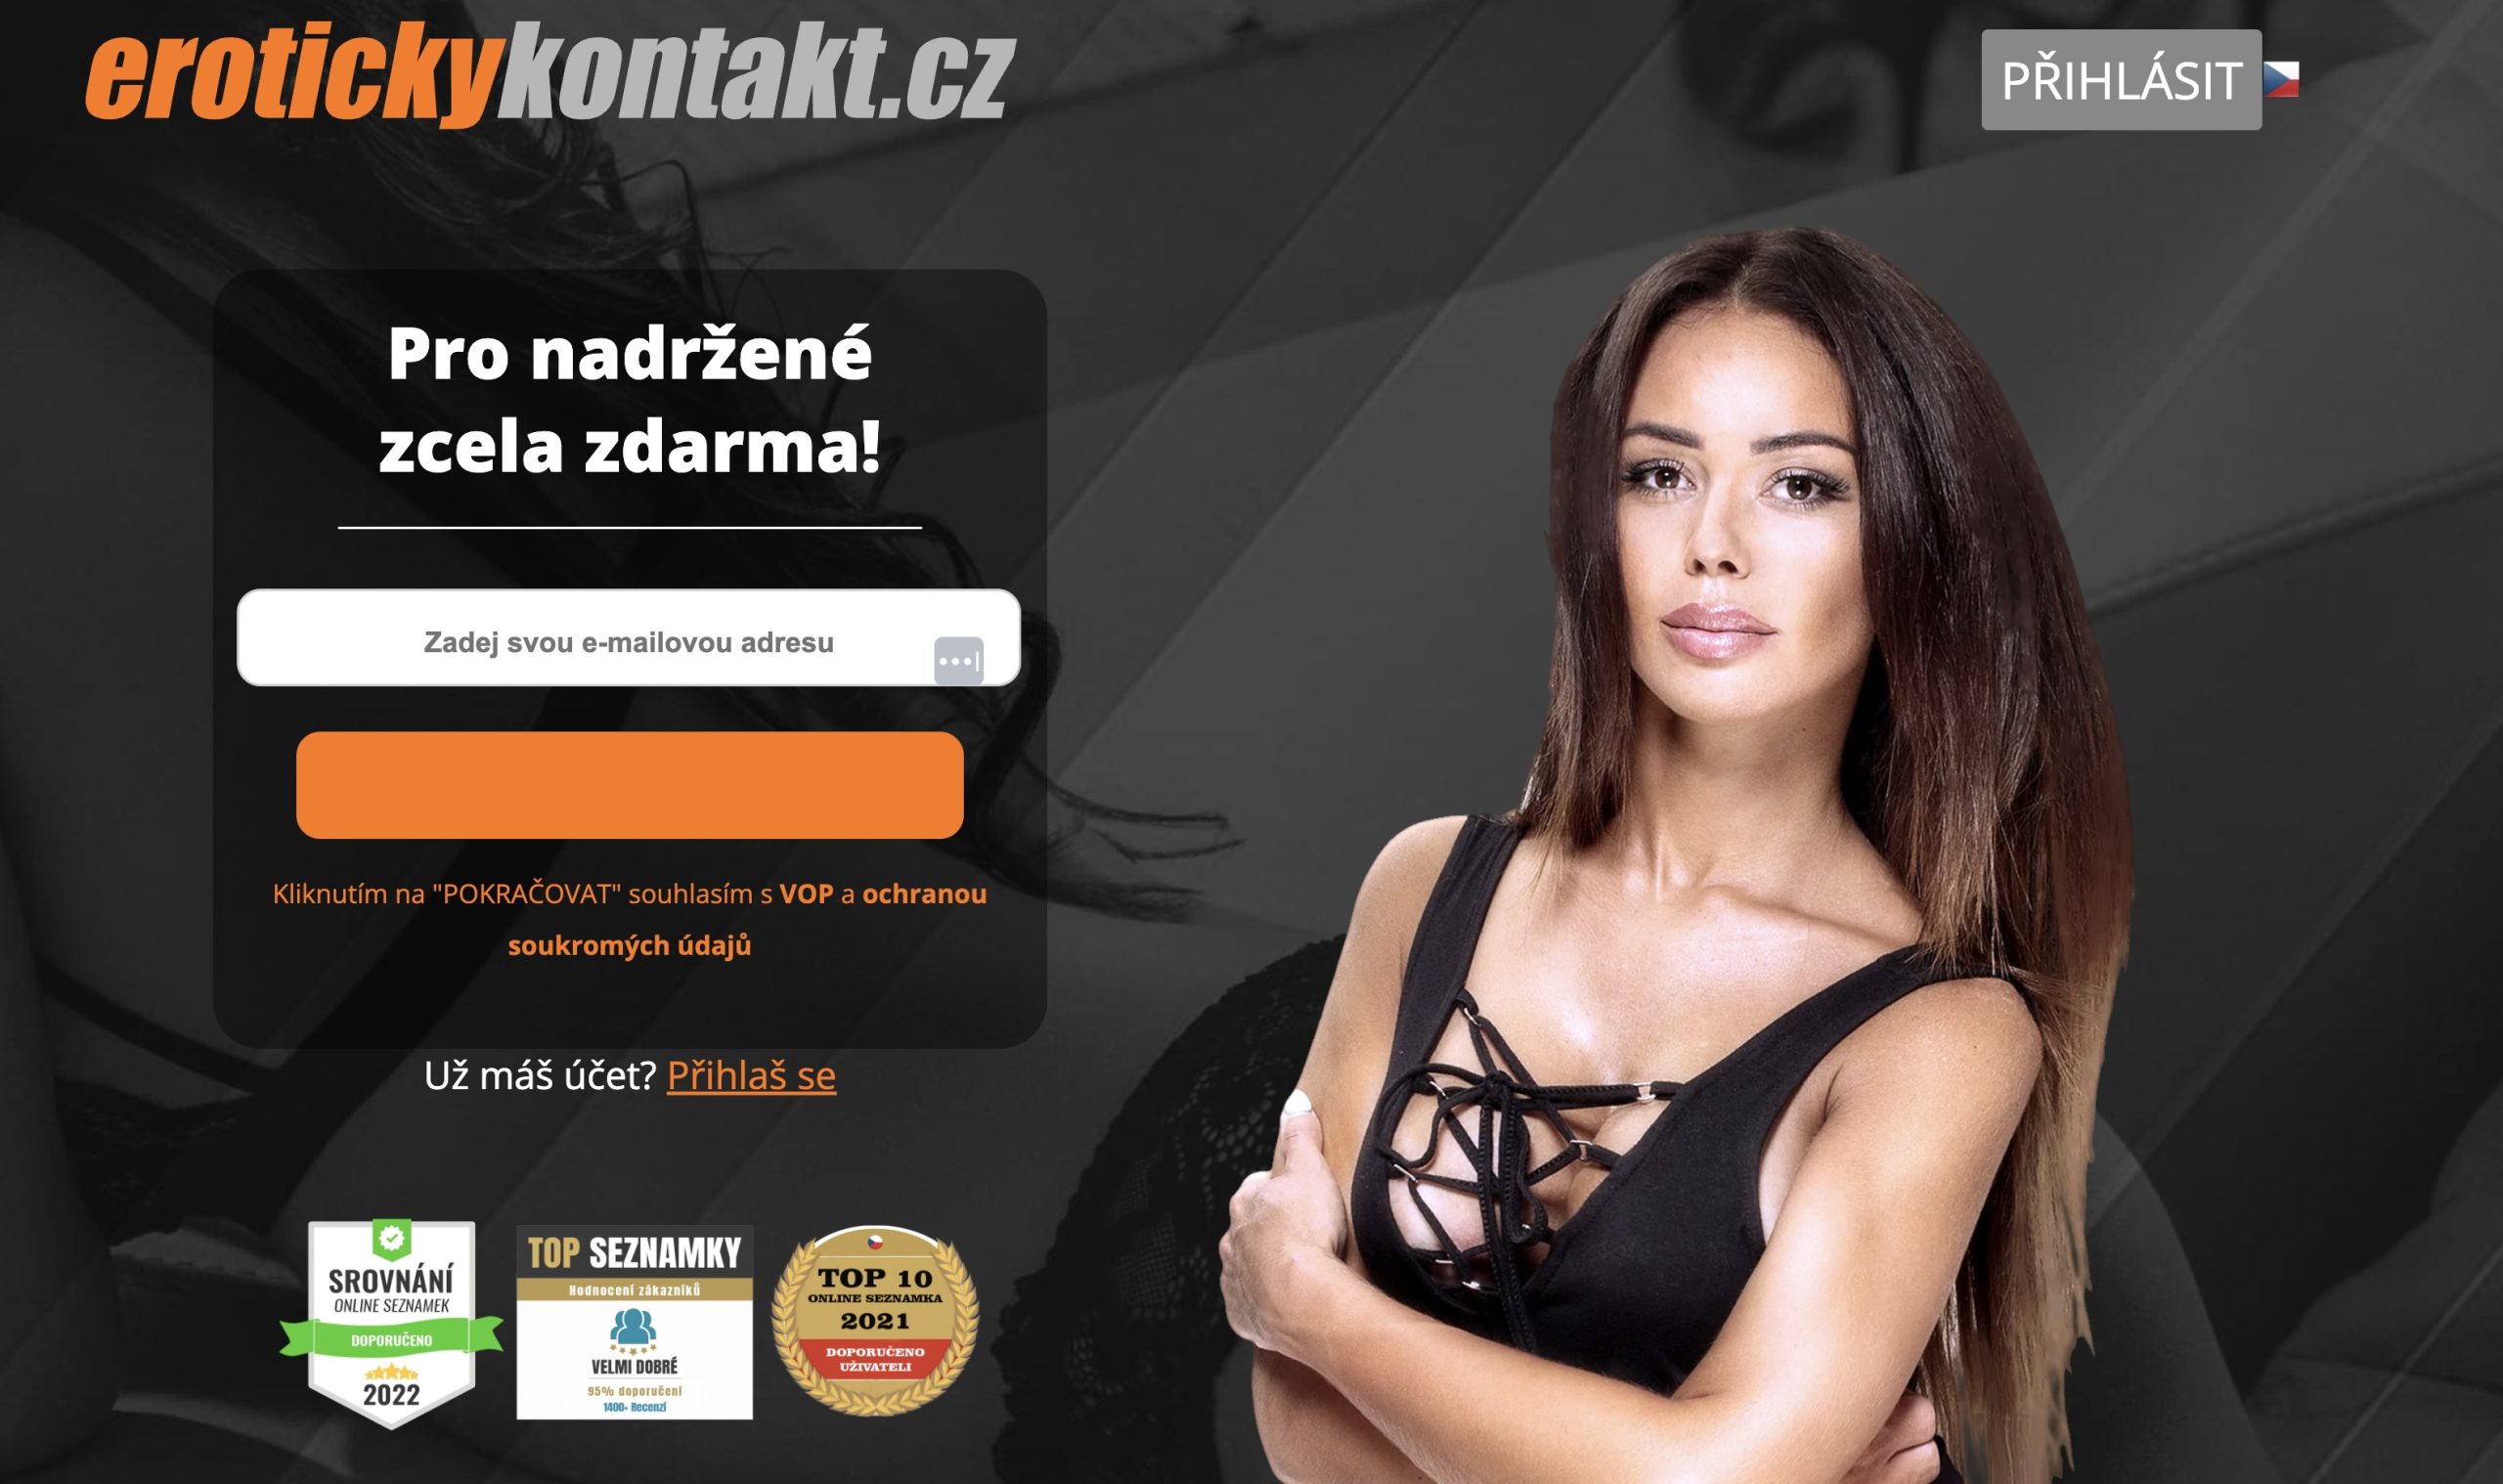 erotickykontakt.cz